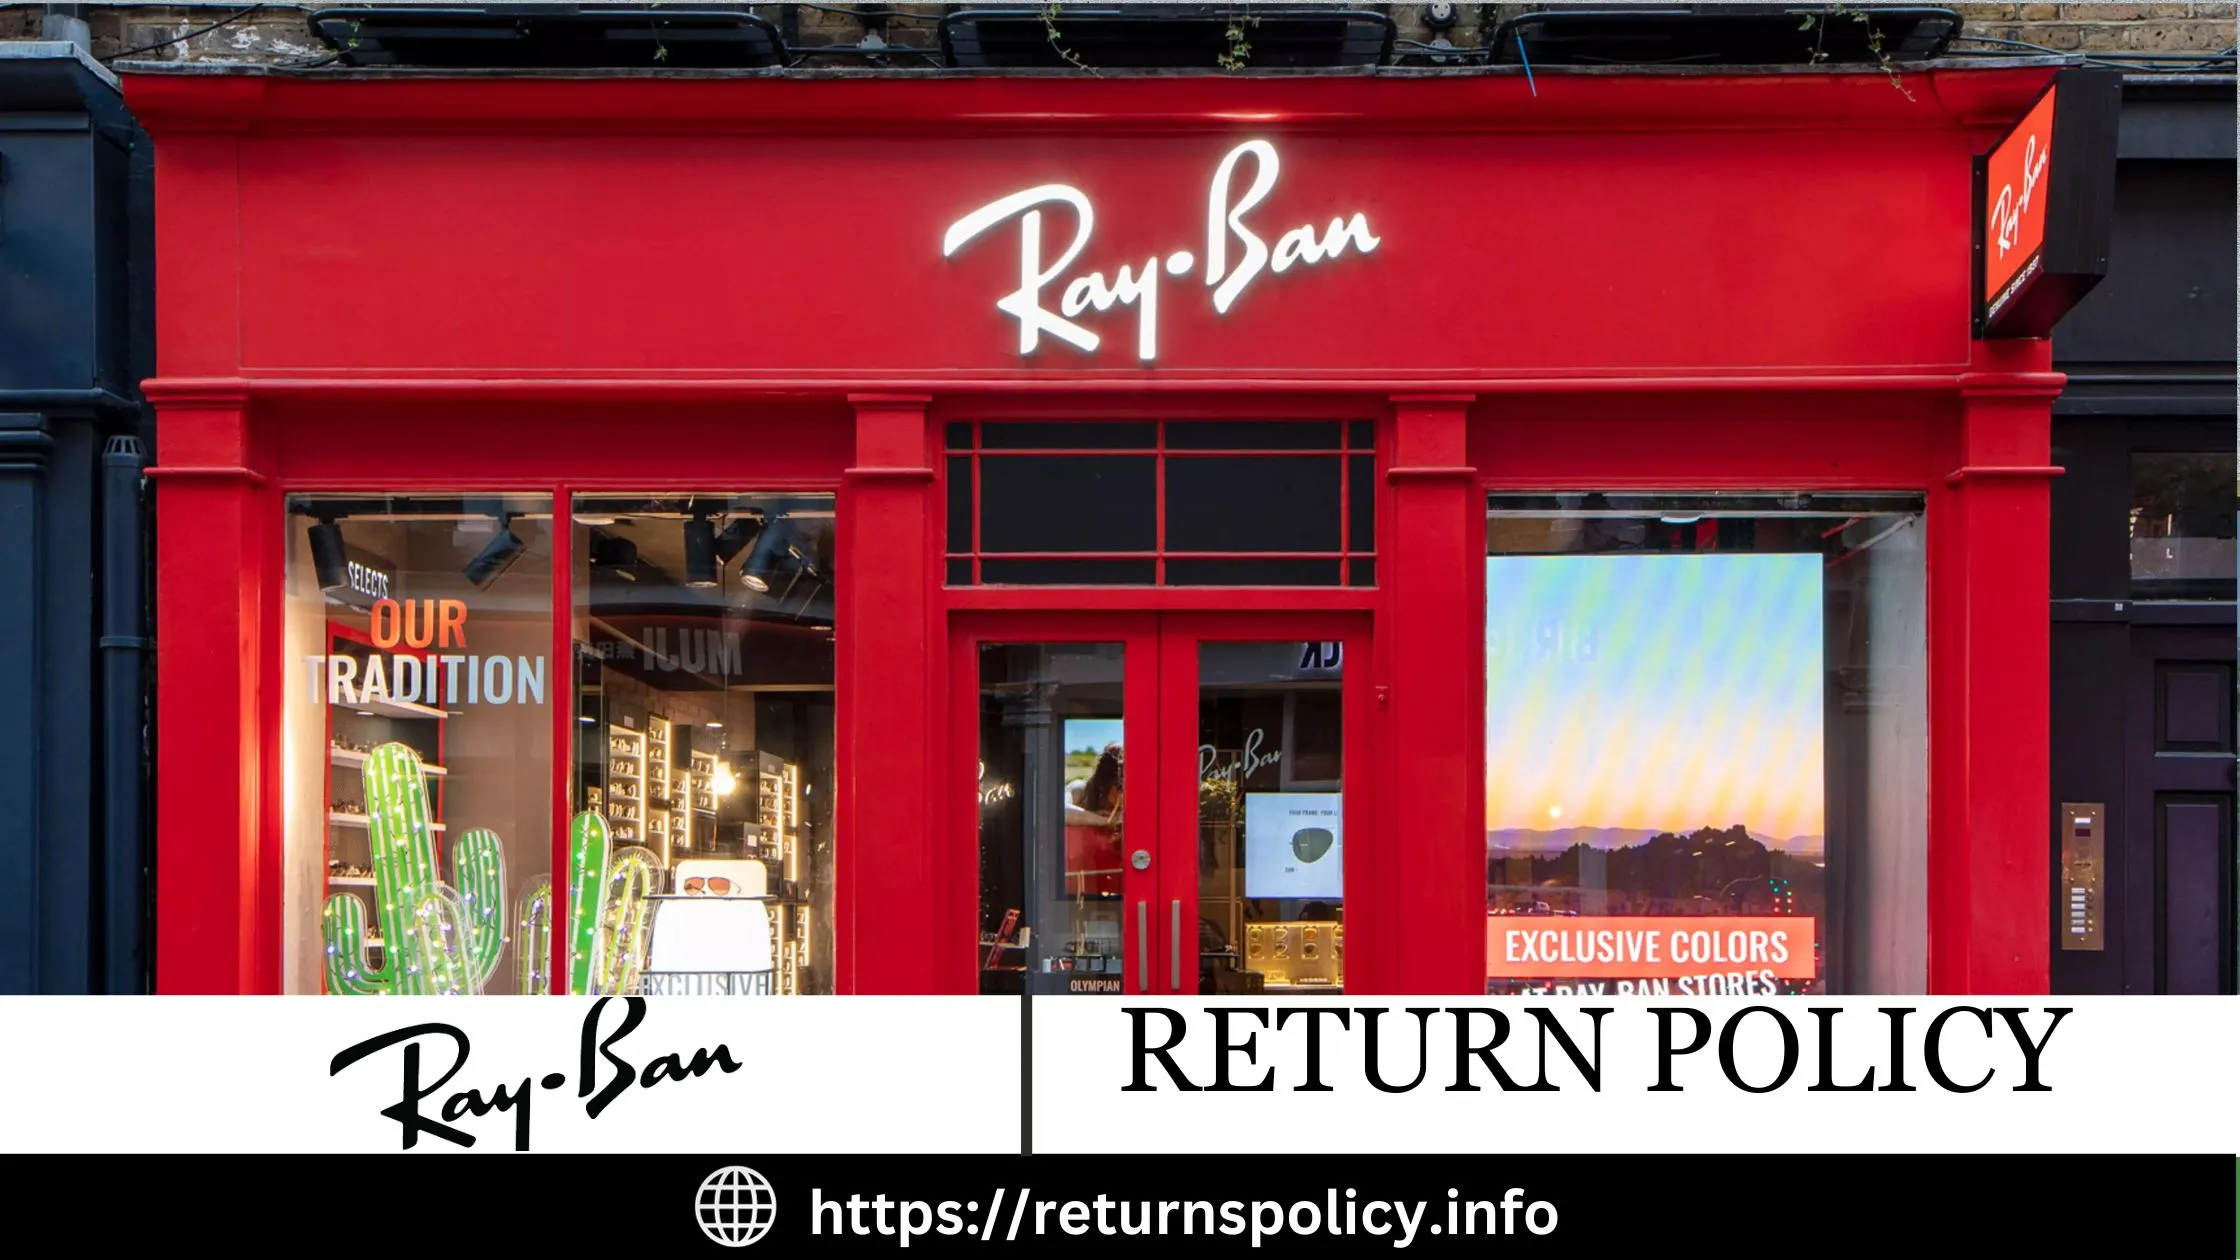 Ray Ban Return Policy